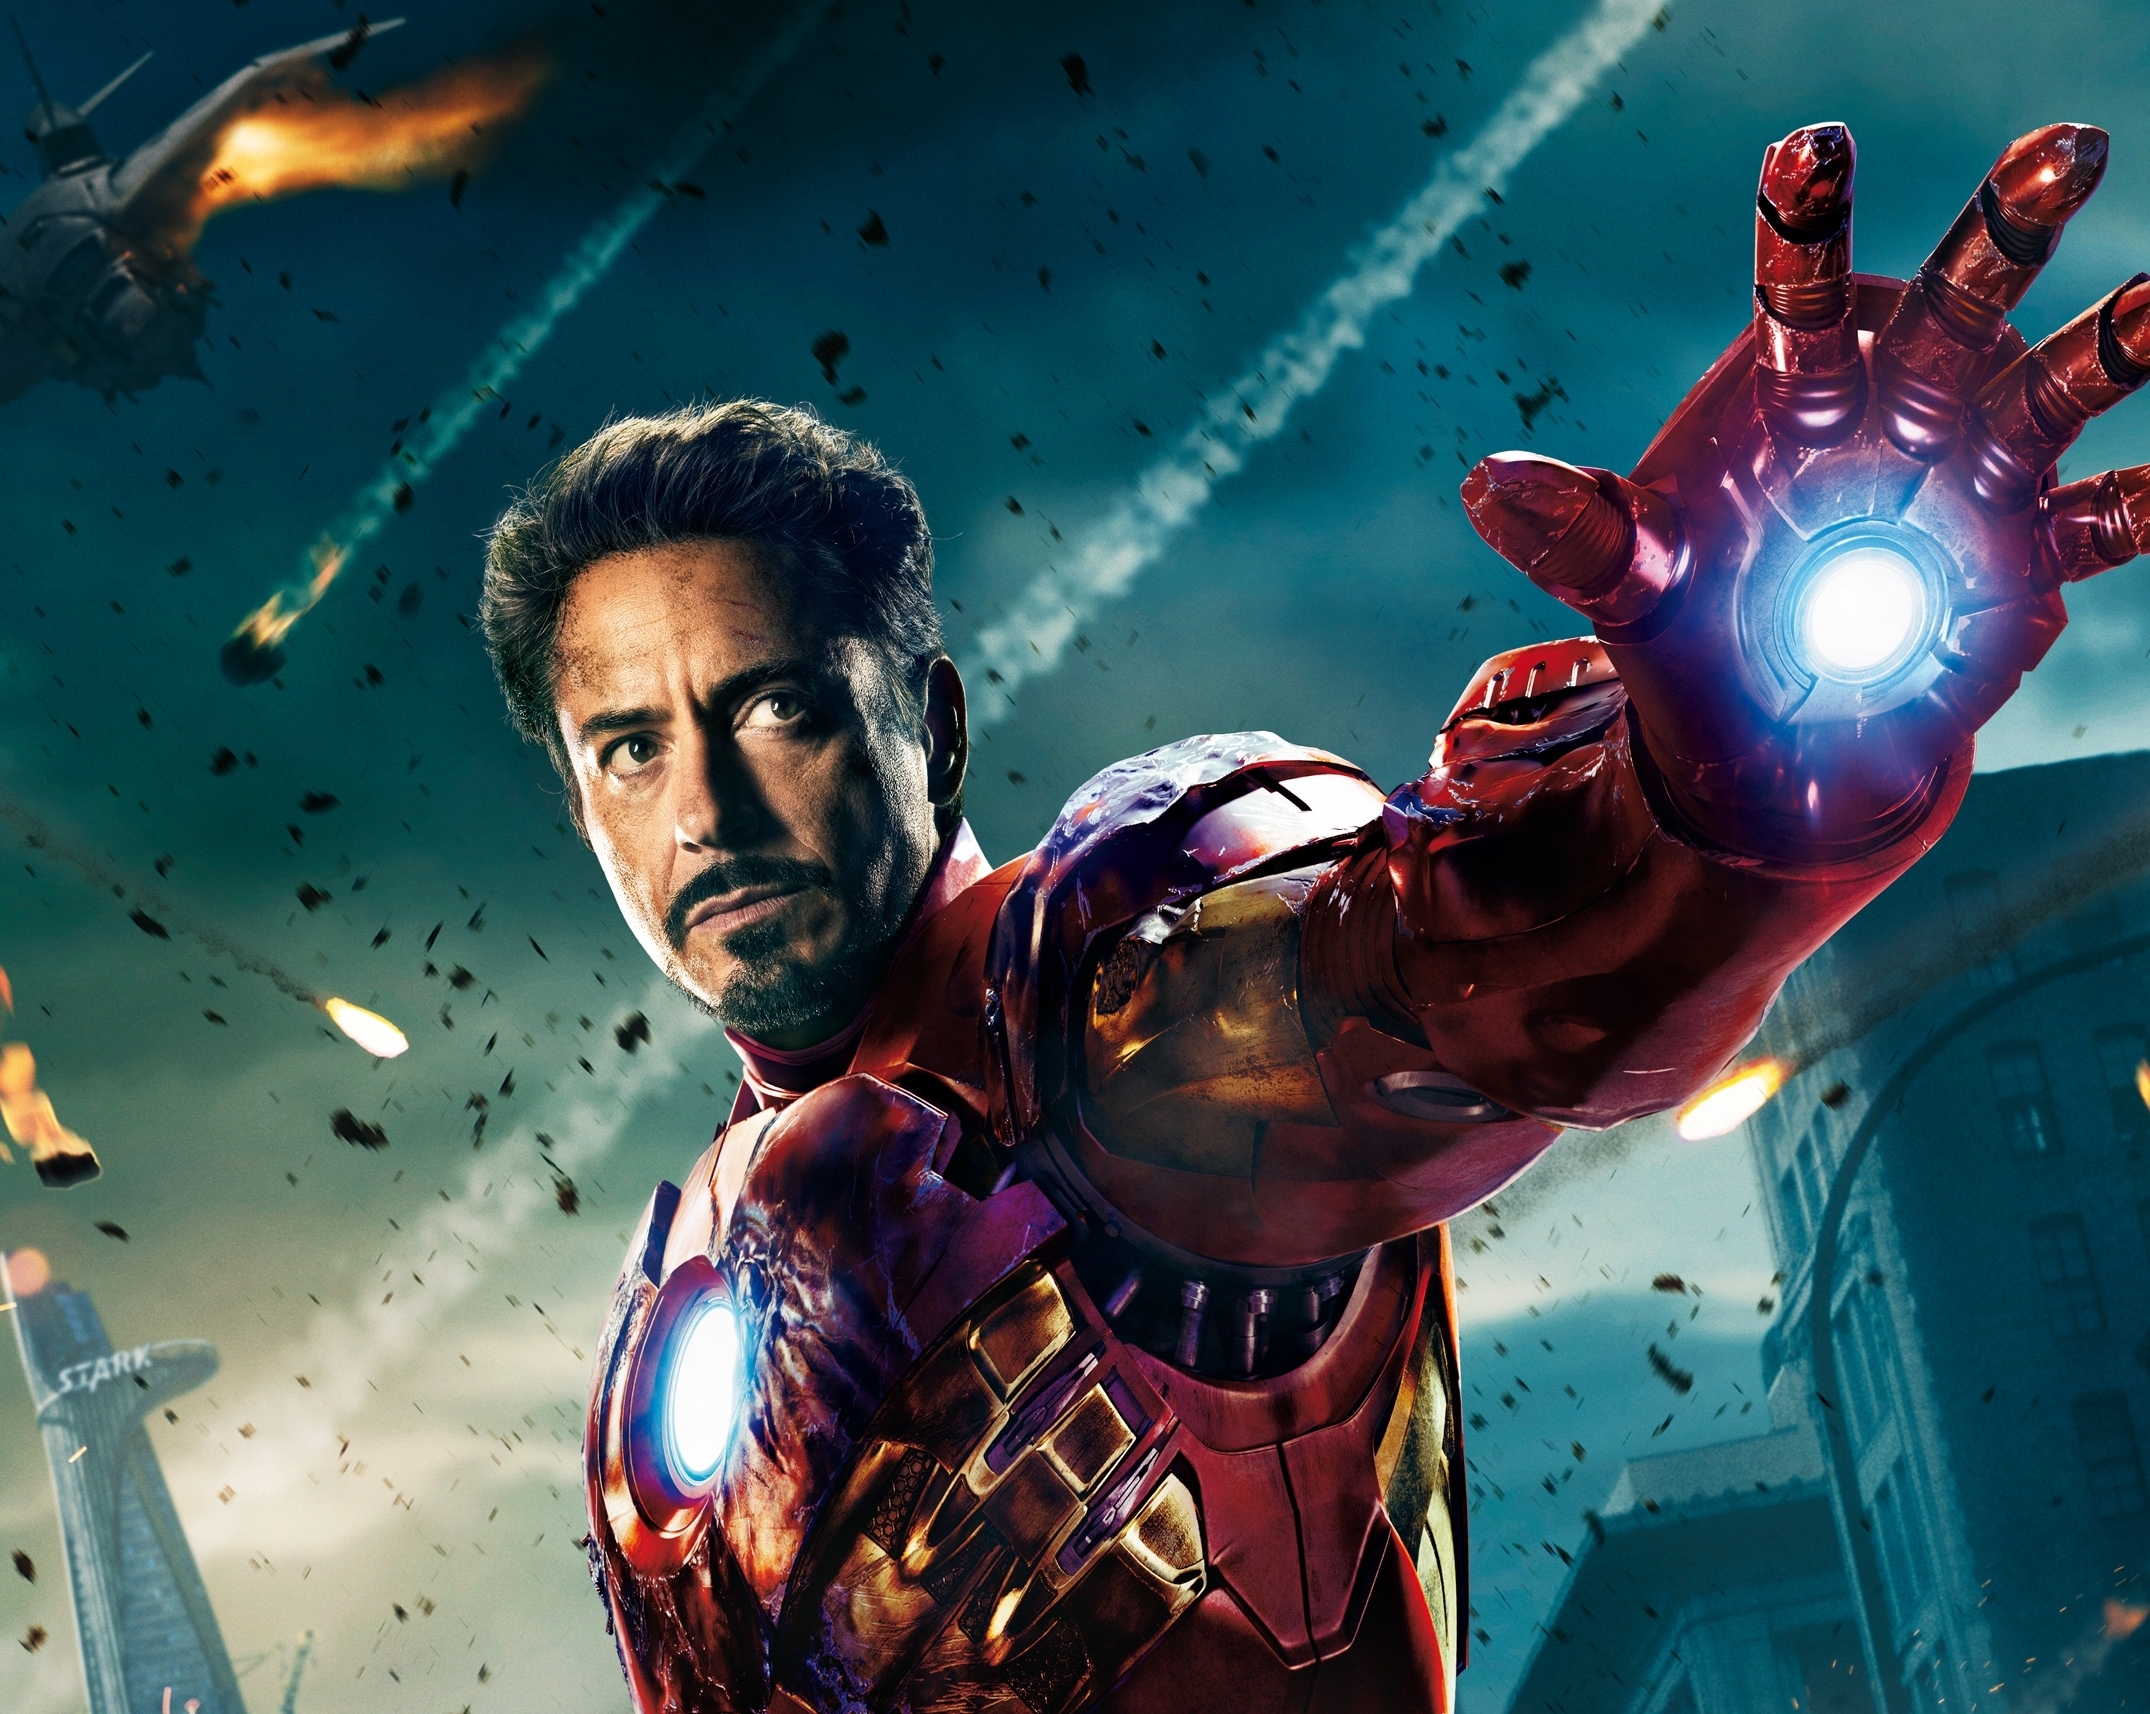 Images The Avengers (2012 film) Robert Downey Jr Iron Man hero film 2150x1714 Movies